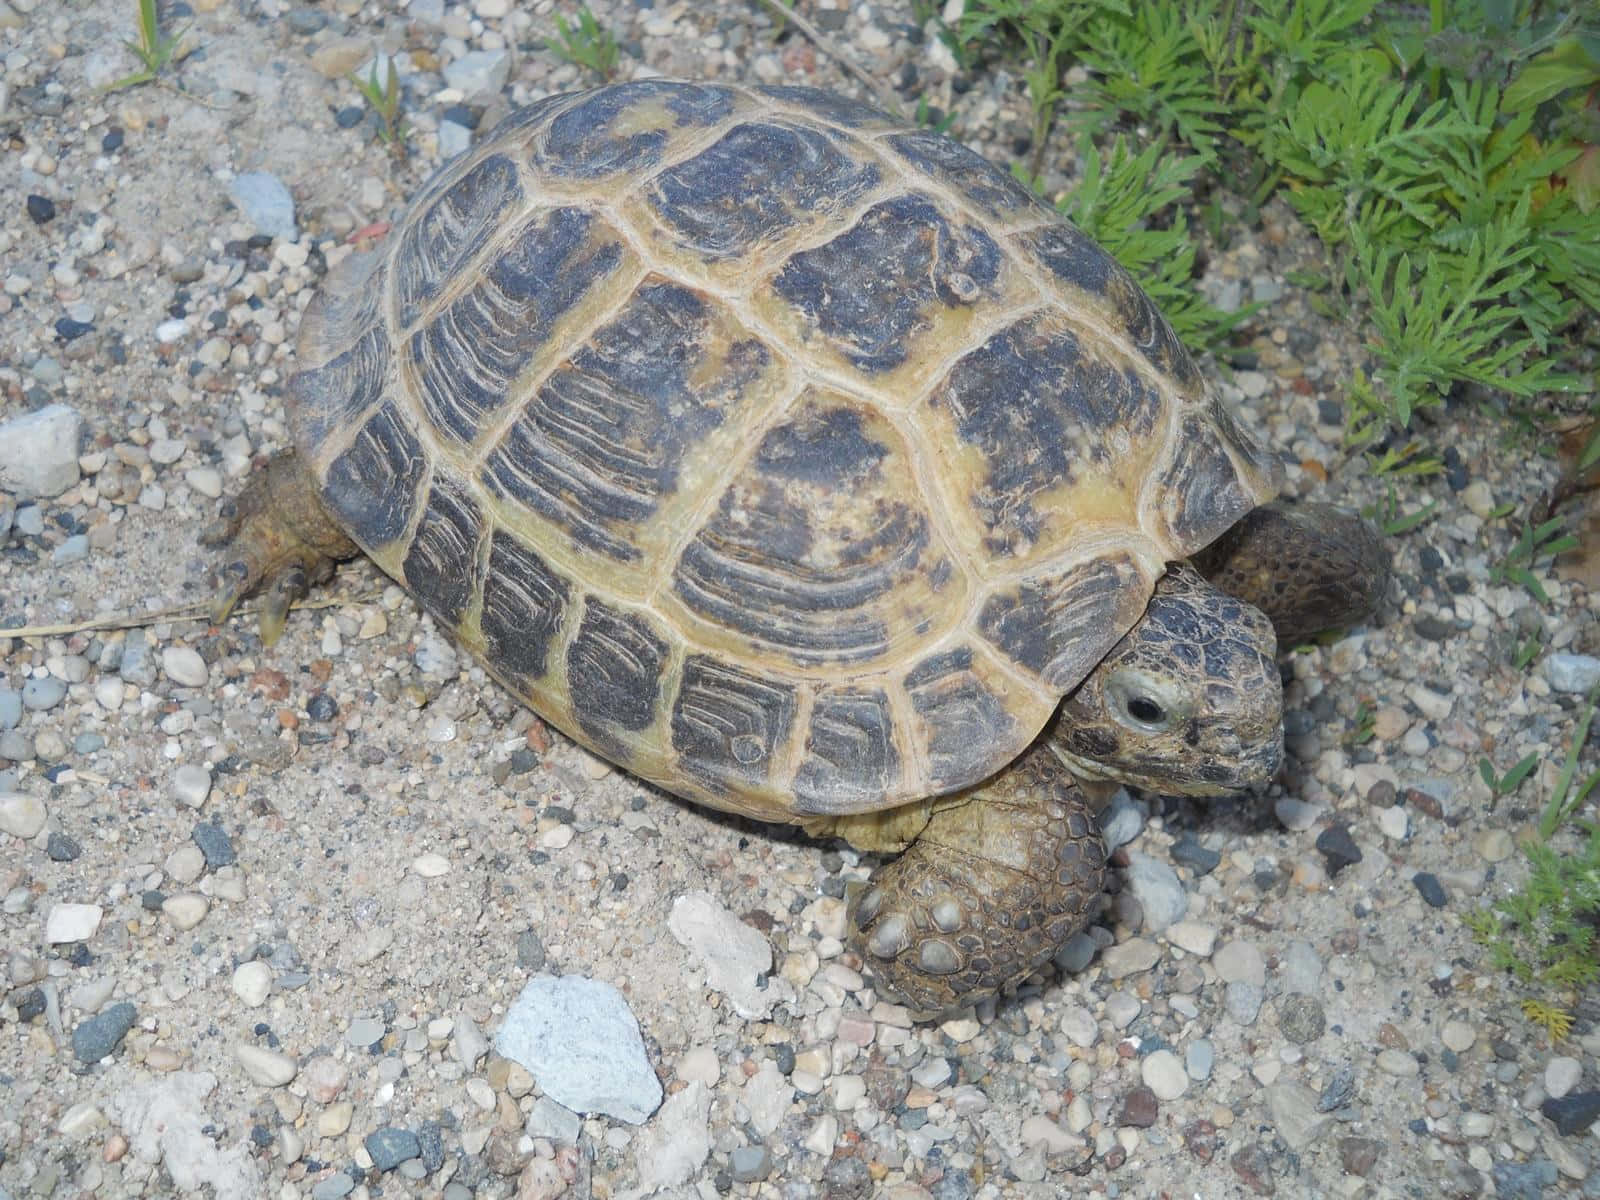 A Galápagos giant tortoise roaming in a lush green habitat